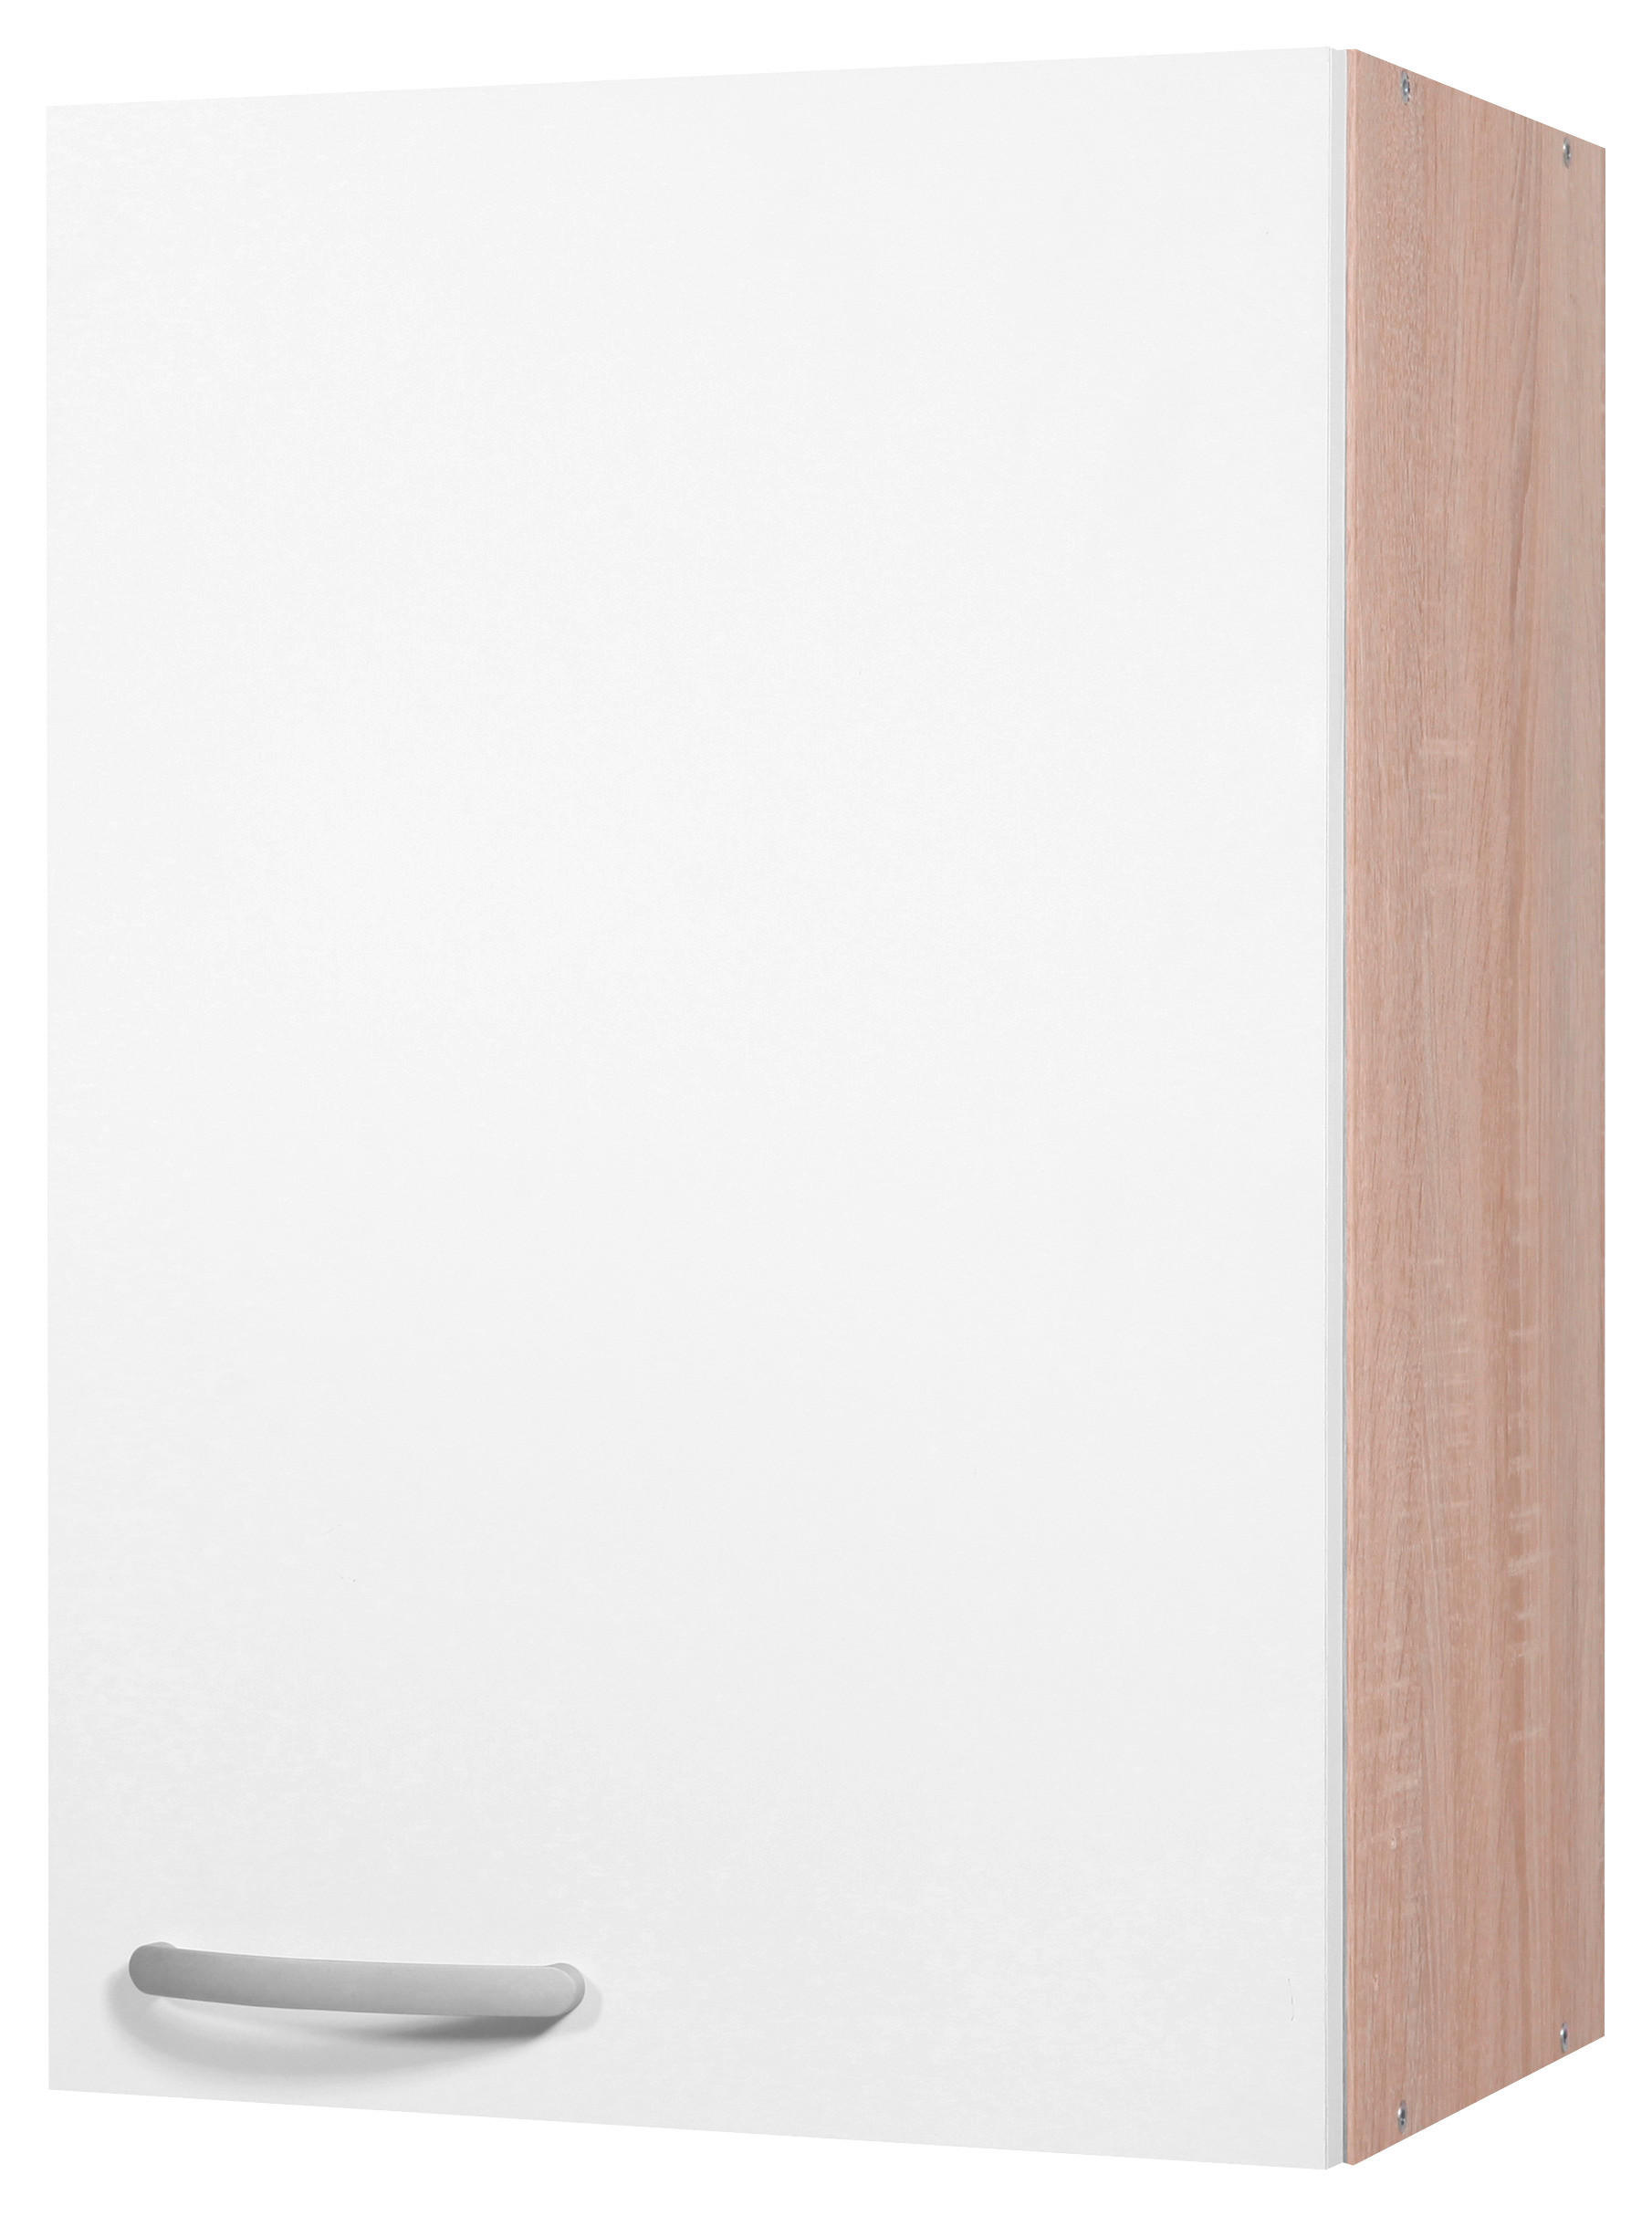 GORNJI KUHINJSKI ELEMENT   - sonoma hrast/boja aluminijuma, Dizajnerski, metal/pločasti materijal (60/60/35cm) - Boxxx